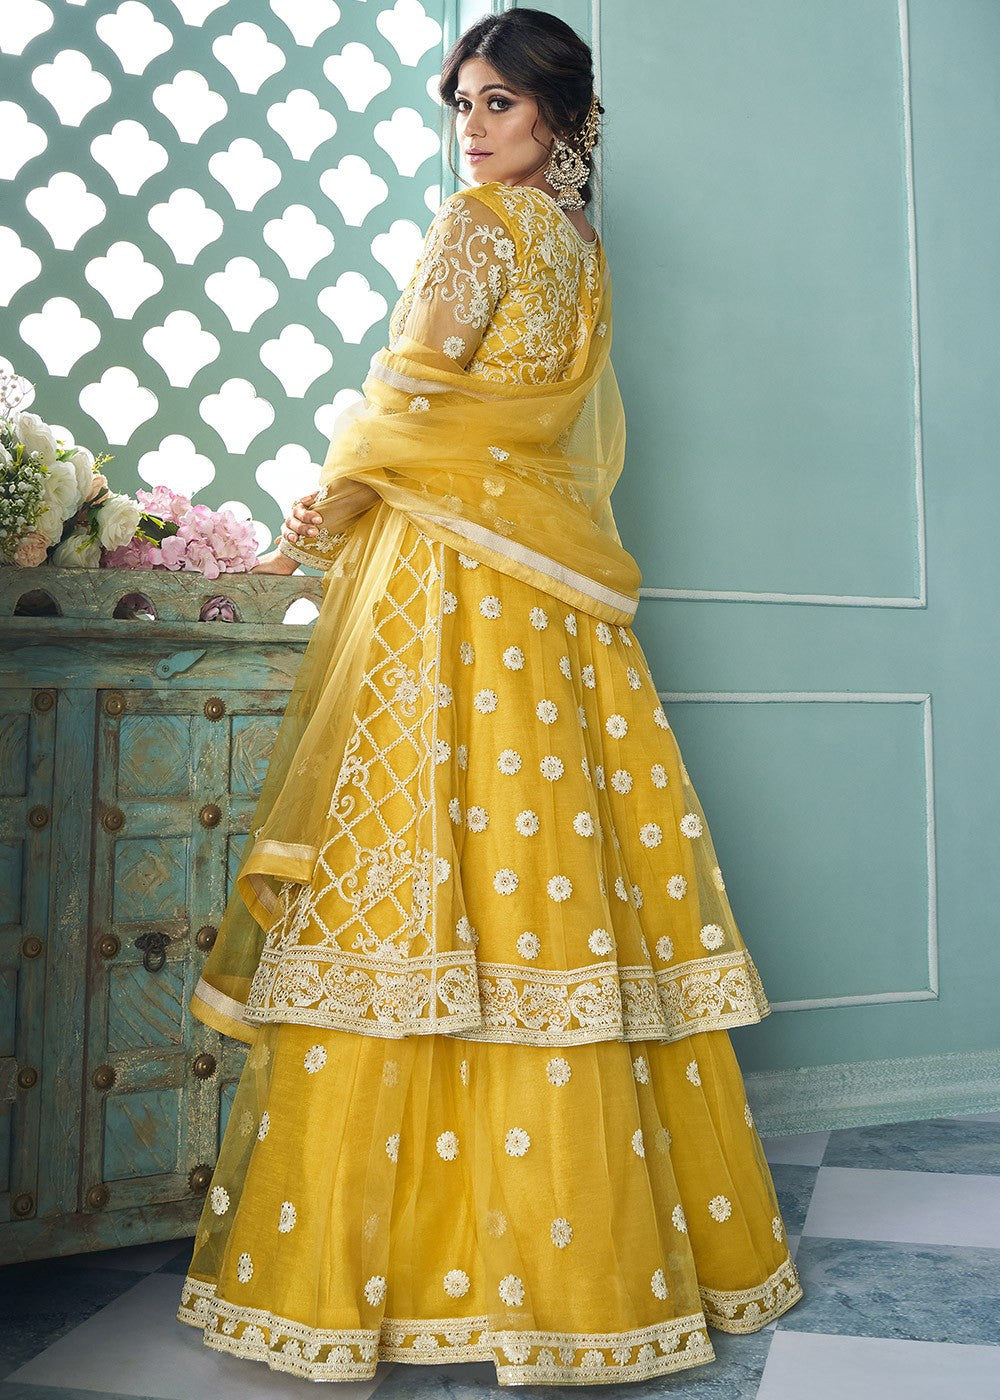 Graceful Yellow Shamita Shetty Bell Sleeved Lehenga Style Sharara Suit